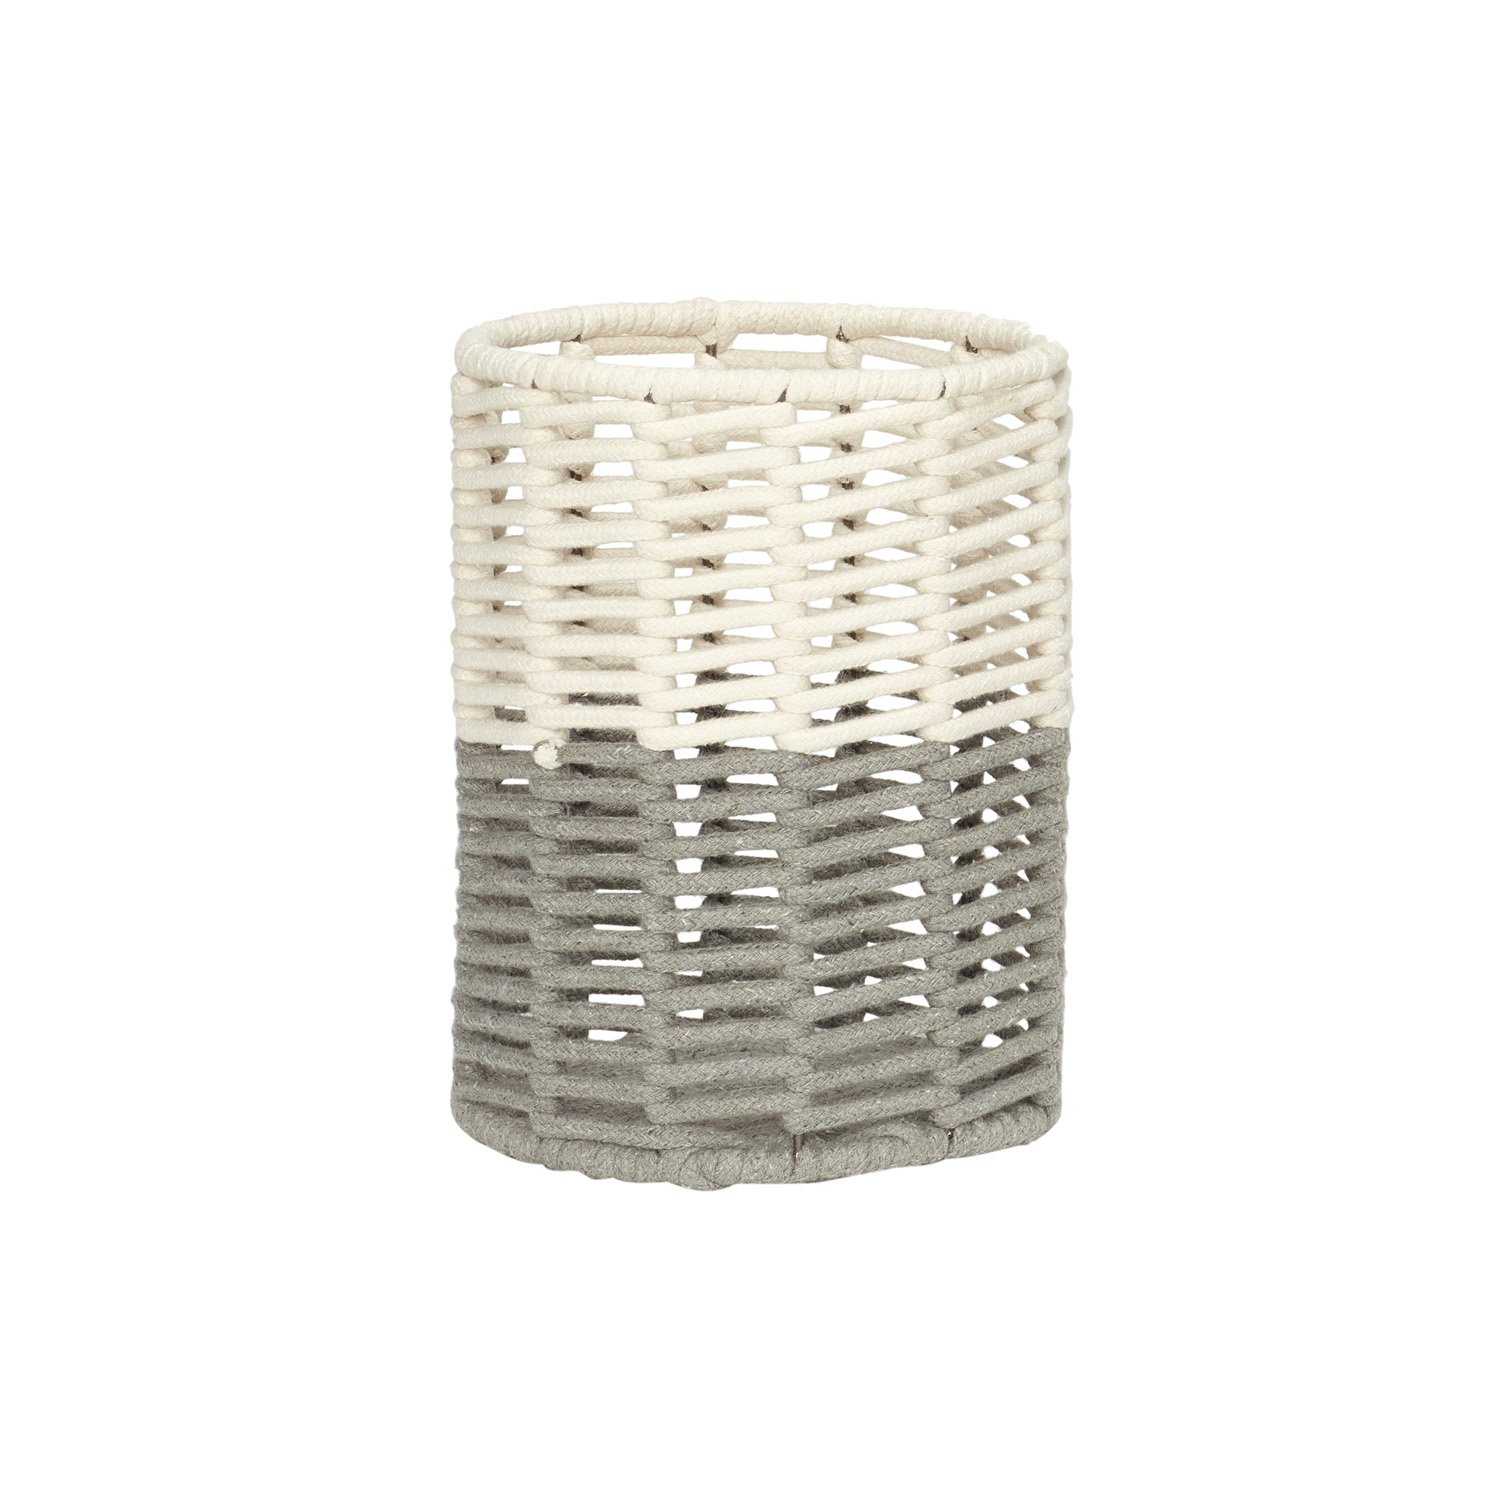 Hubsch Cream and Grey Round Cotton Rope Basket in Small